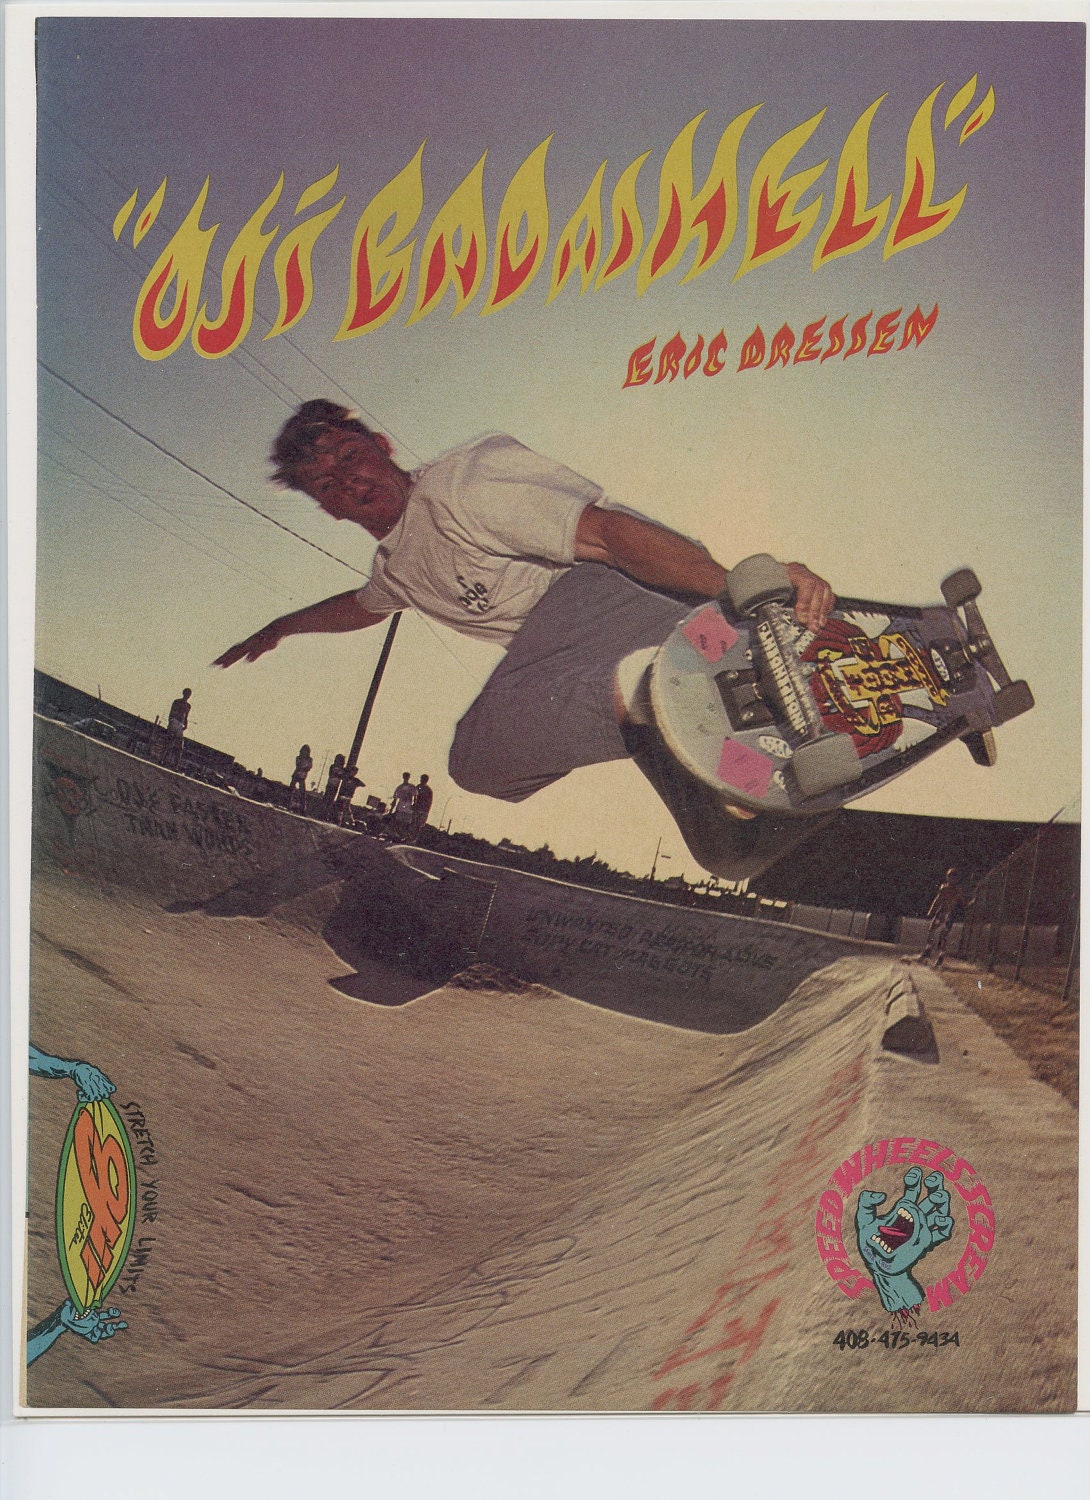 ERIC DRESSEN Speed Wheels Skateboard Ad Vintage Advertisement